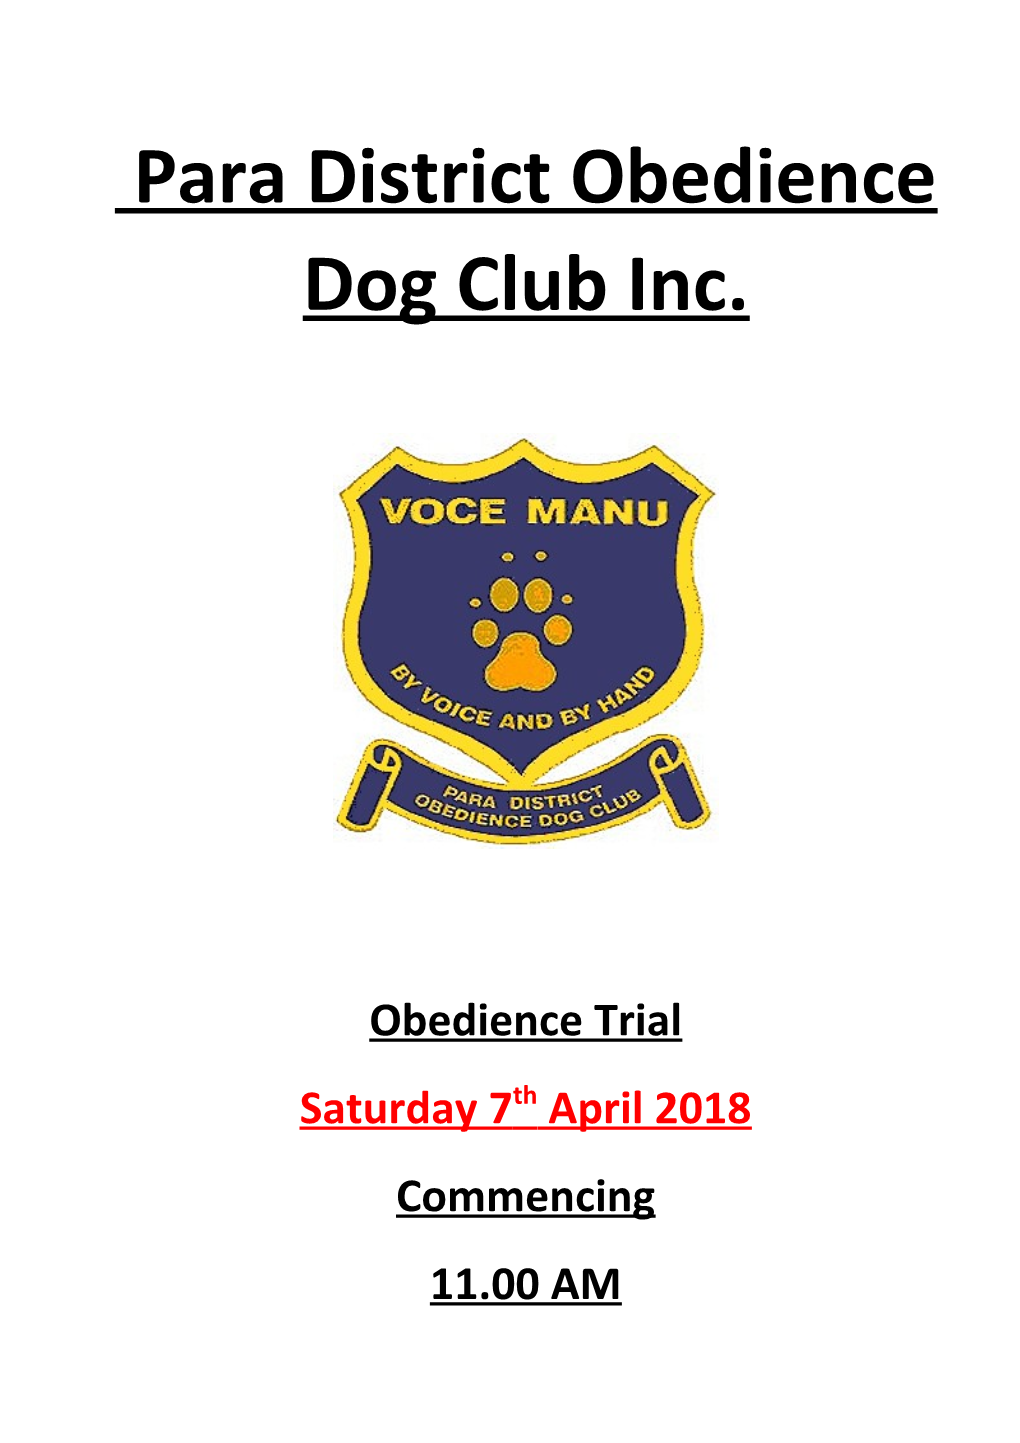 Para District Obedience Dog Club Inc